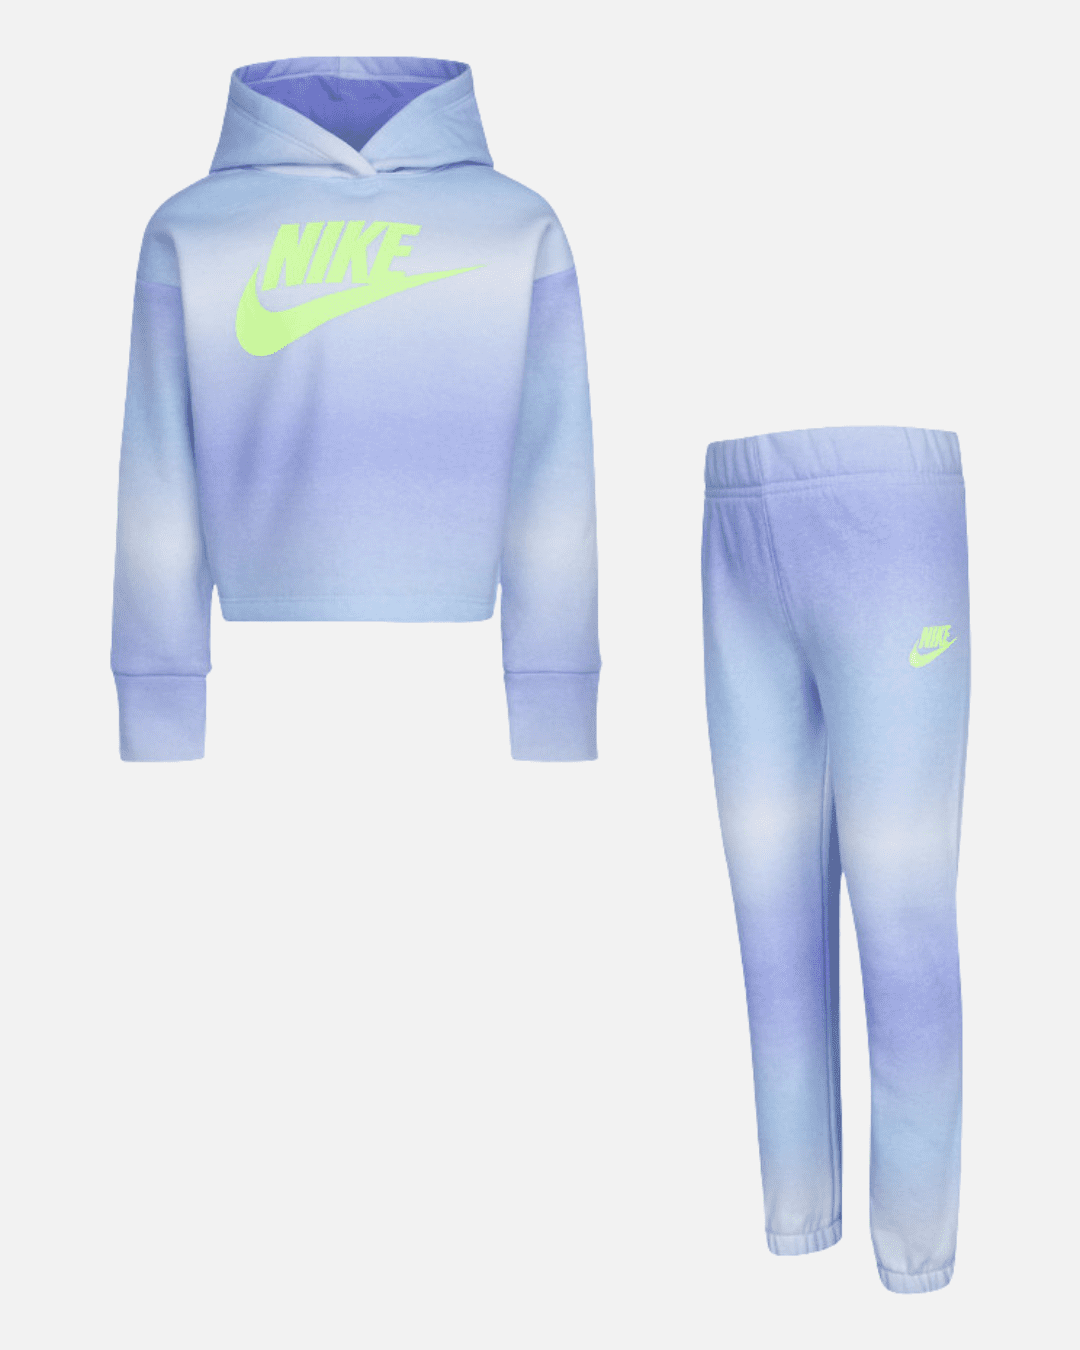 Nike Printed Club Fleece Kids Tracksuit Set - Blue/Green 